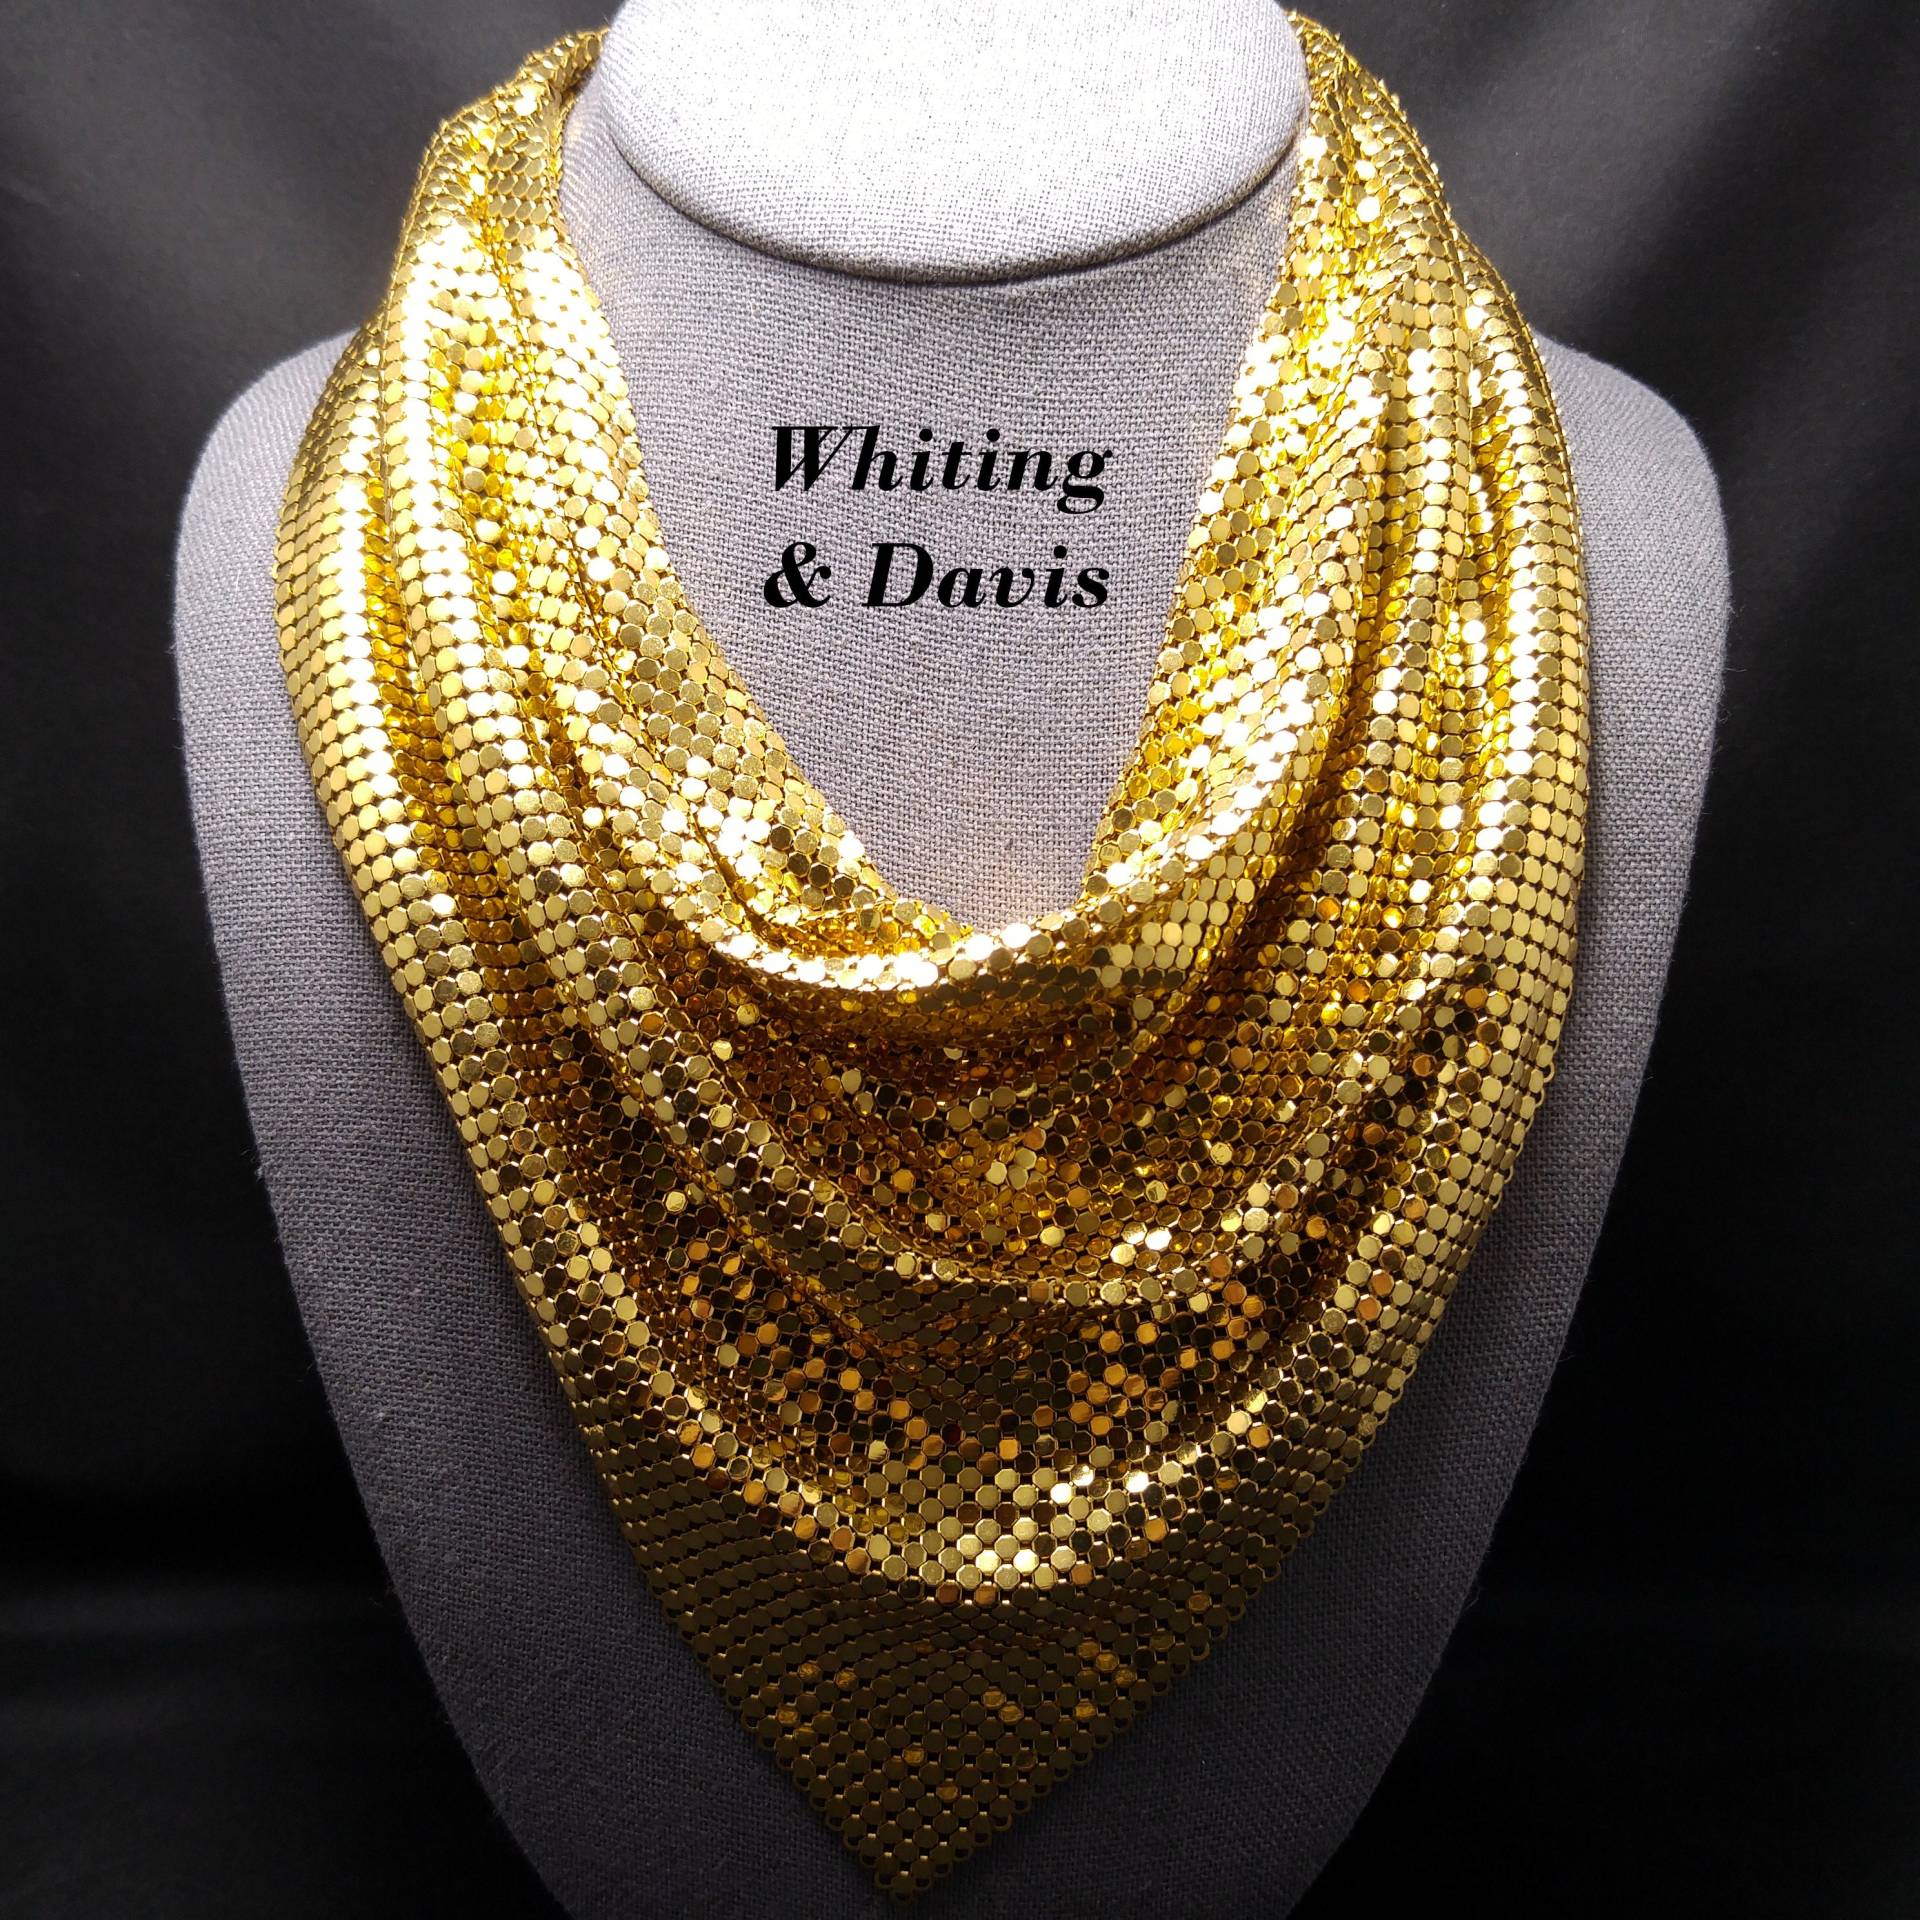 Whiting & Davis Gold Mesh Halskette, Disco Vergoldet, 1970Er Jahre Vintage Halskette von UncoveringVintage